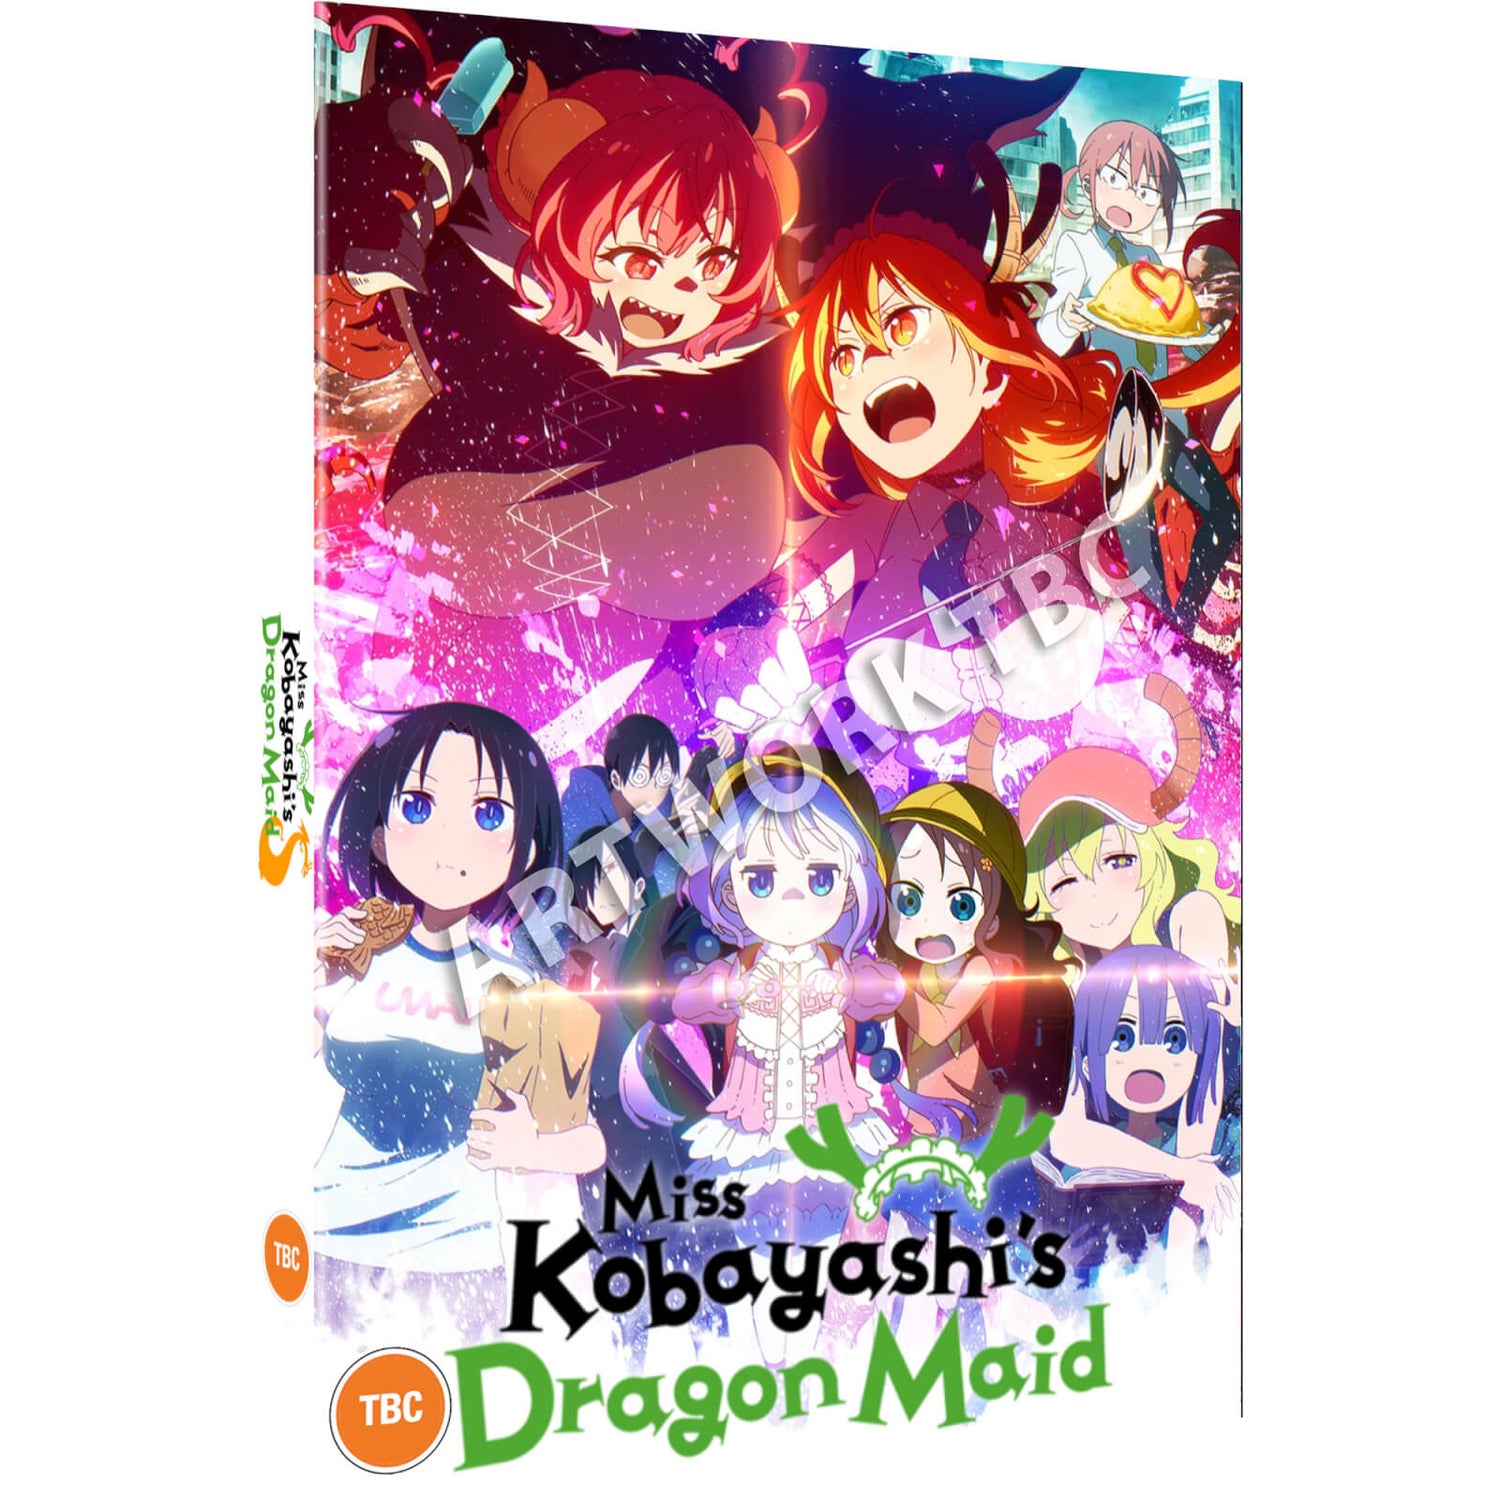 Miss Kobayashi's Dragon Maid S - Season 2